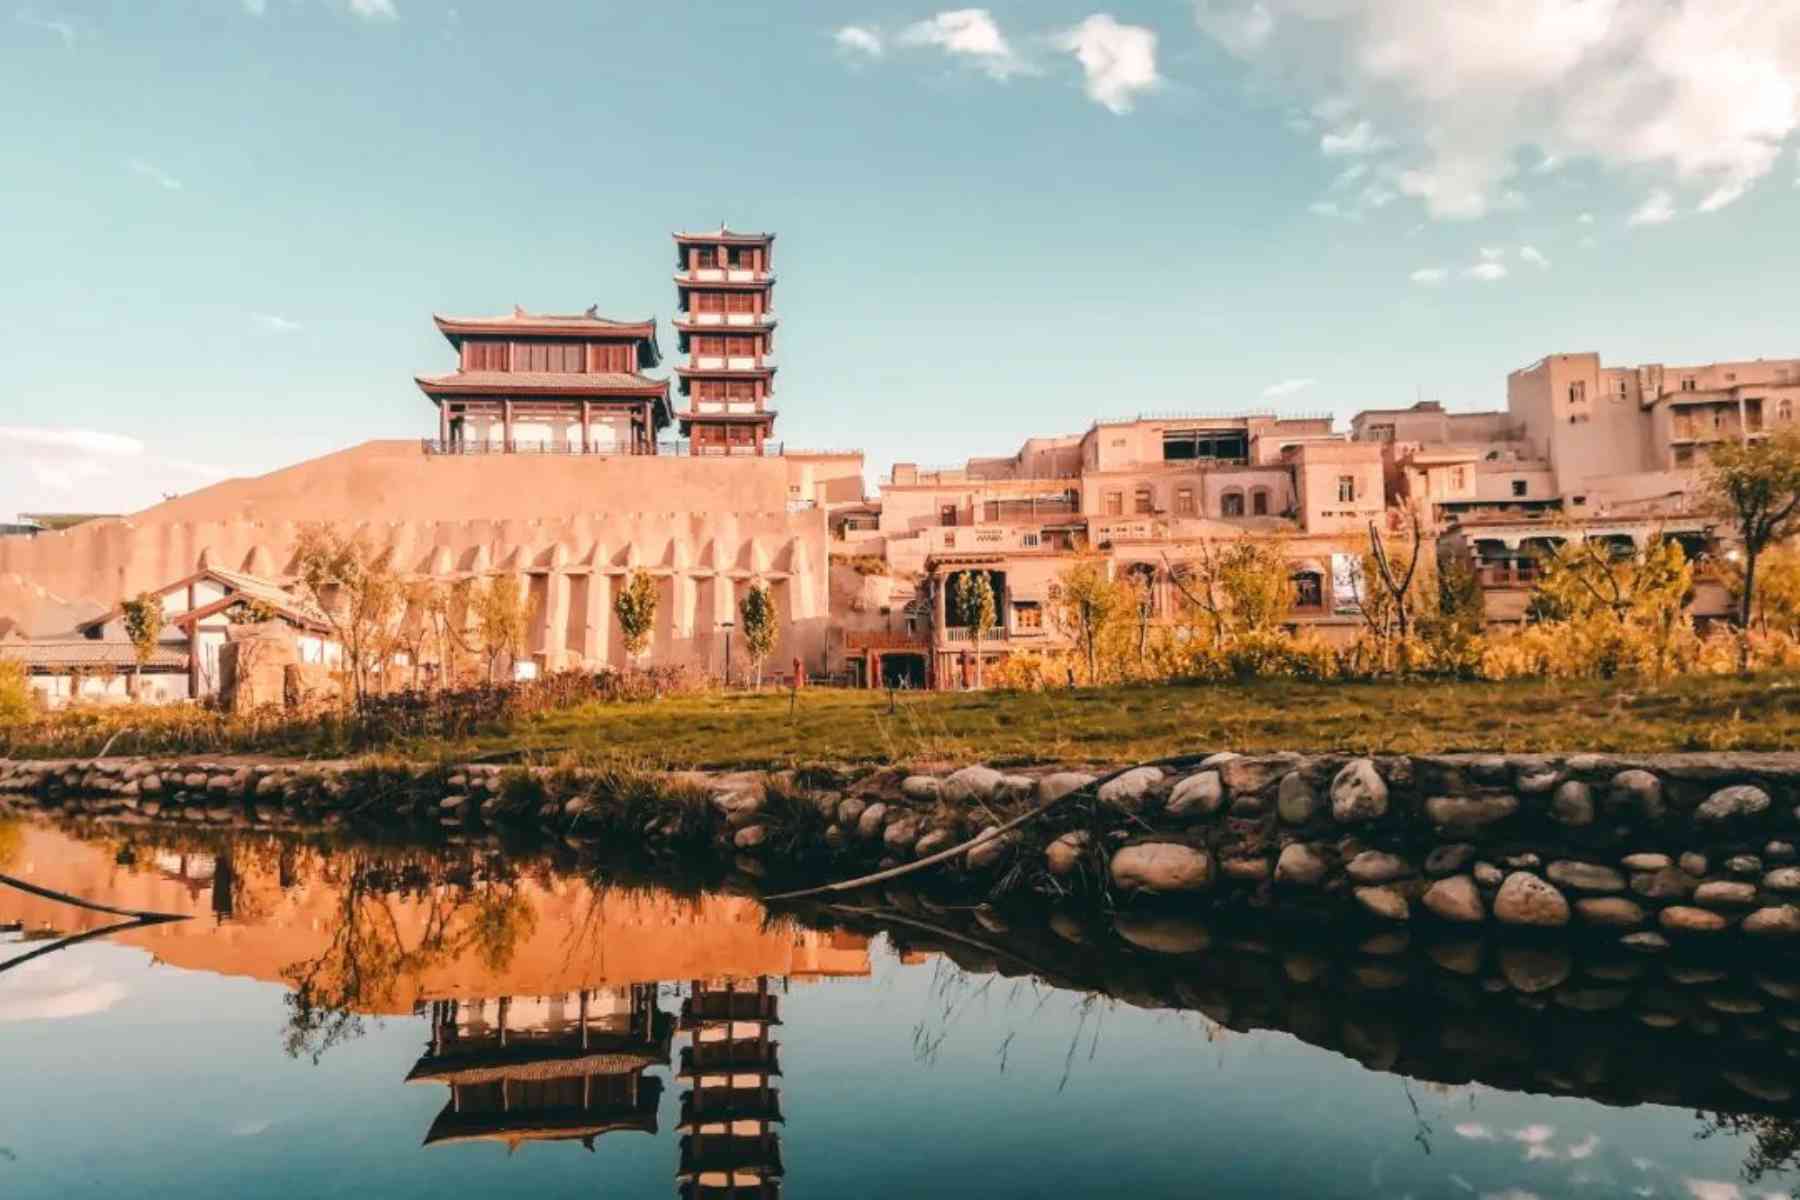 4-Day Xinjiang Private Tour of Kashgar includes Shipton Arh